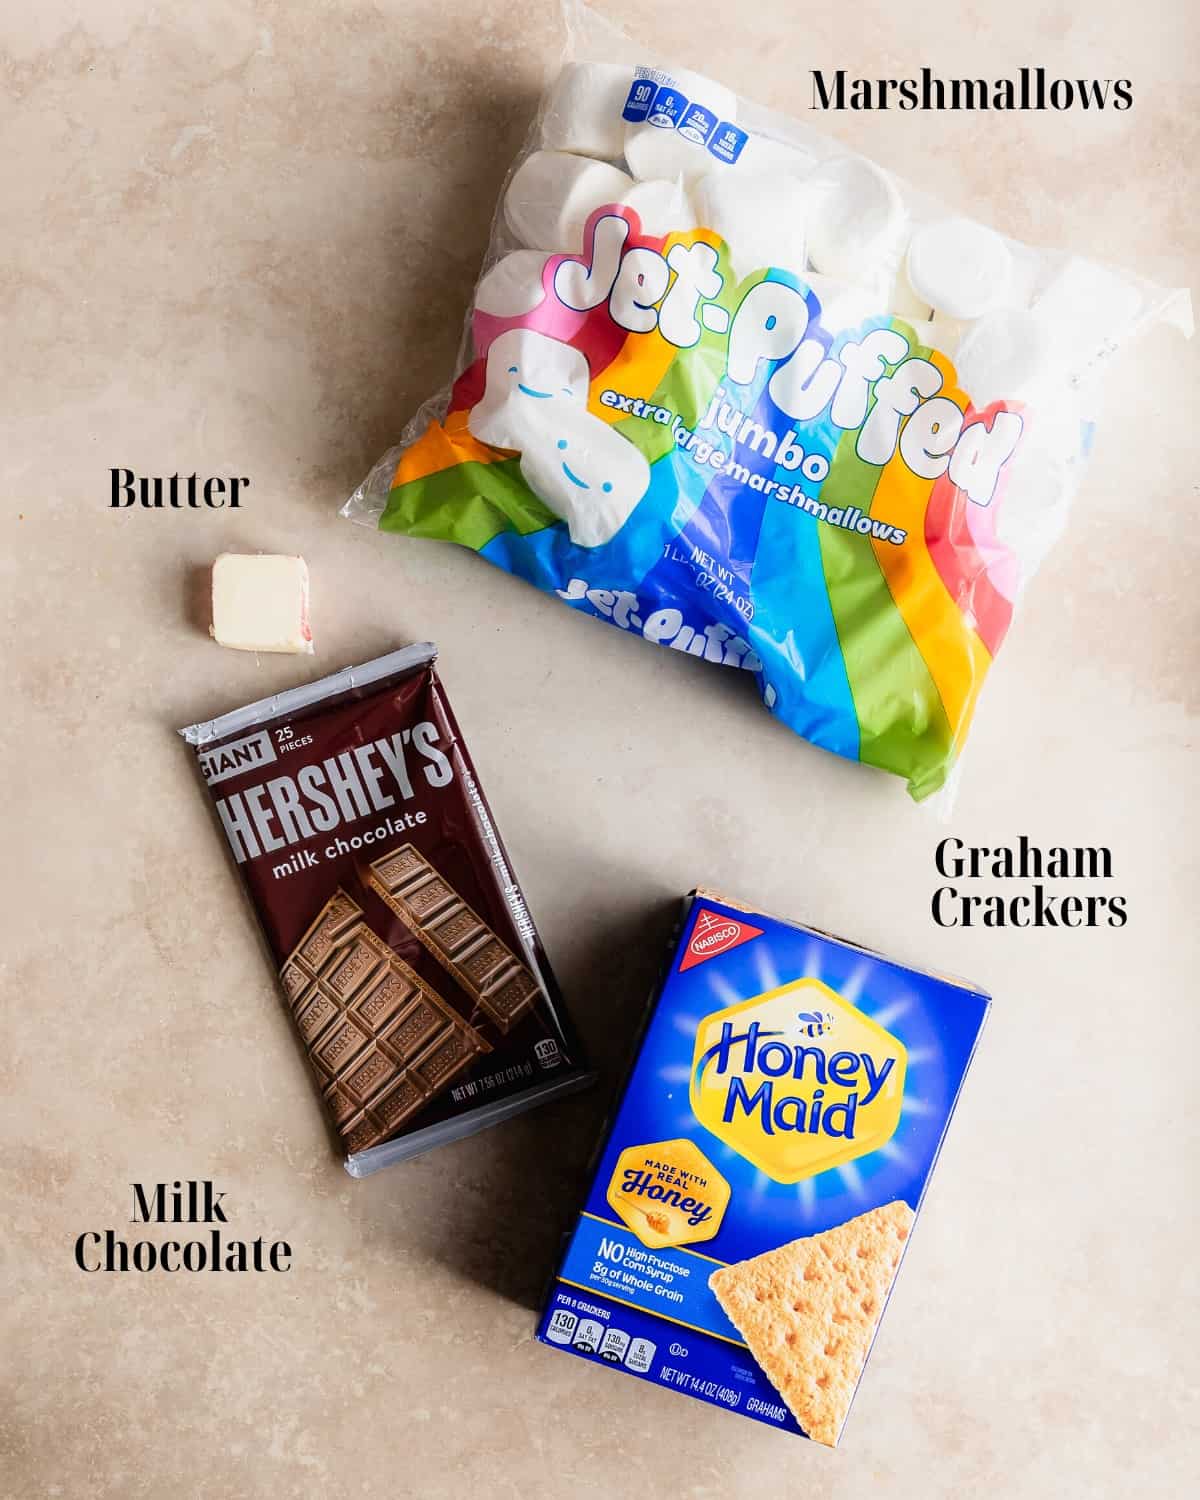 Gather milk chocolate bars, marshmallows and graham crackers.